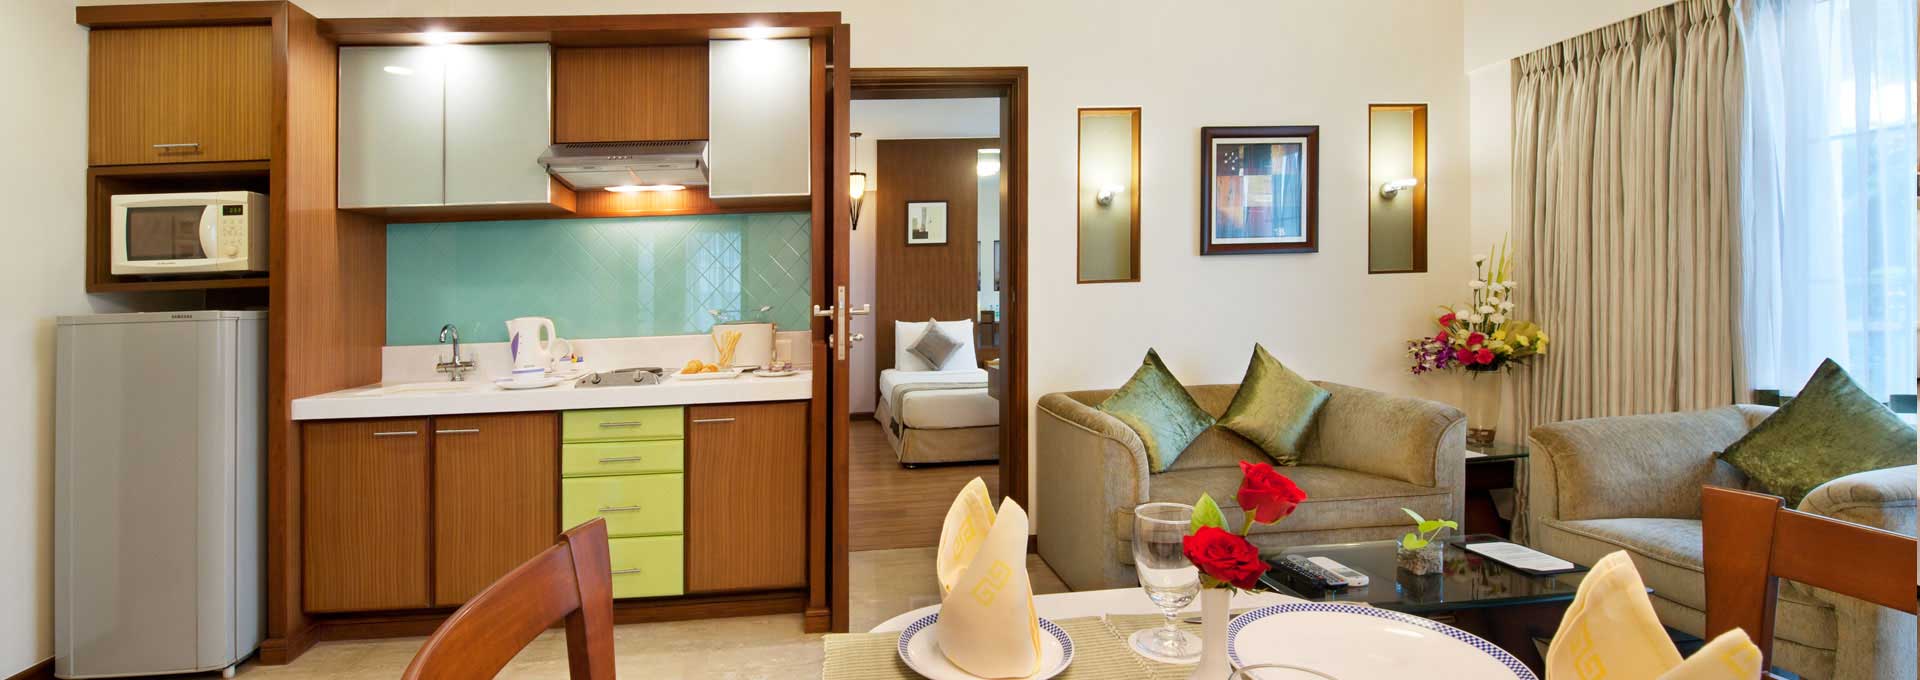 Bed & Breakfast Hotels in Mumbai